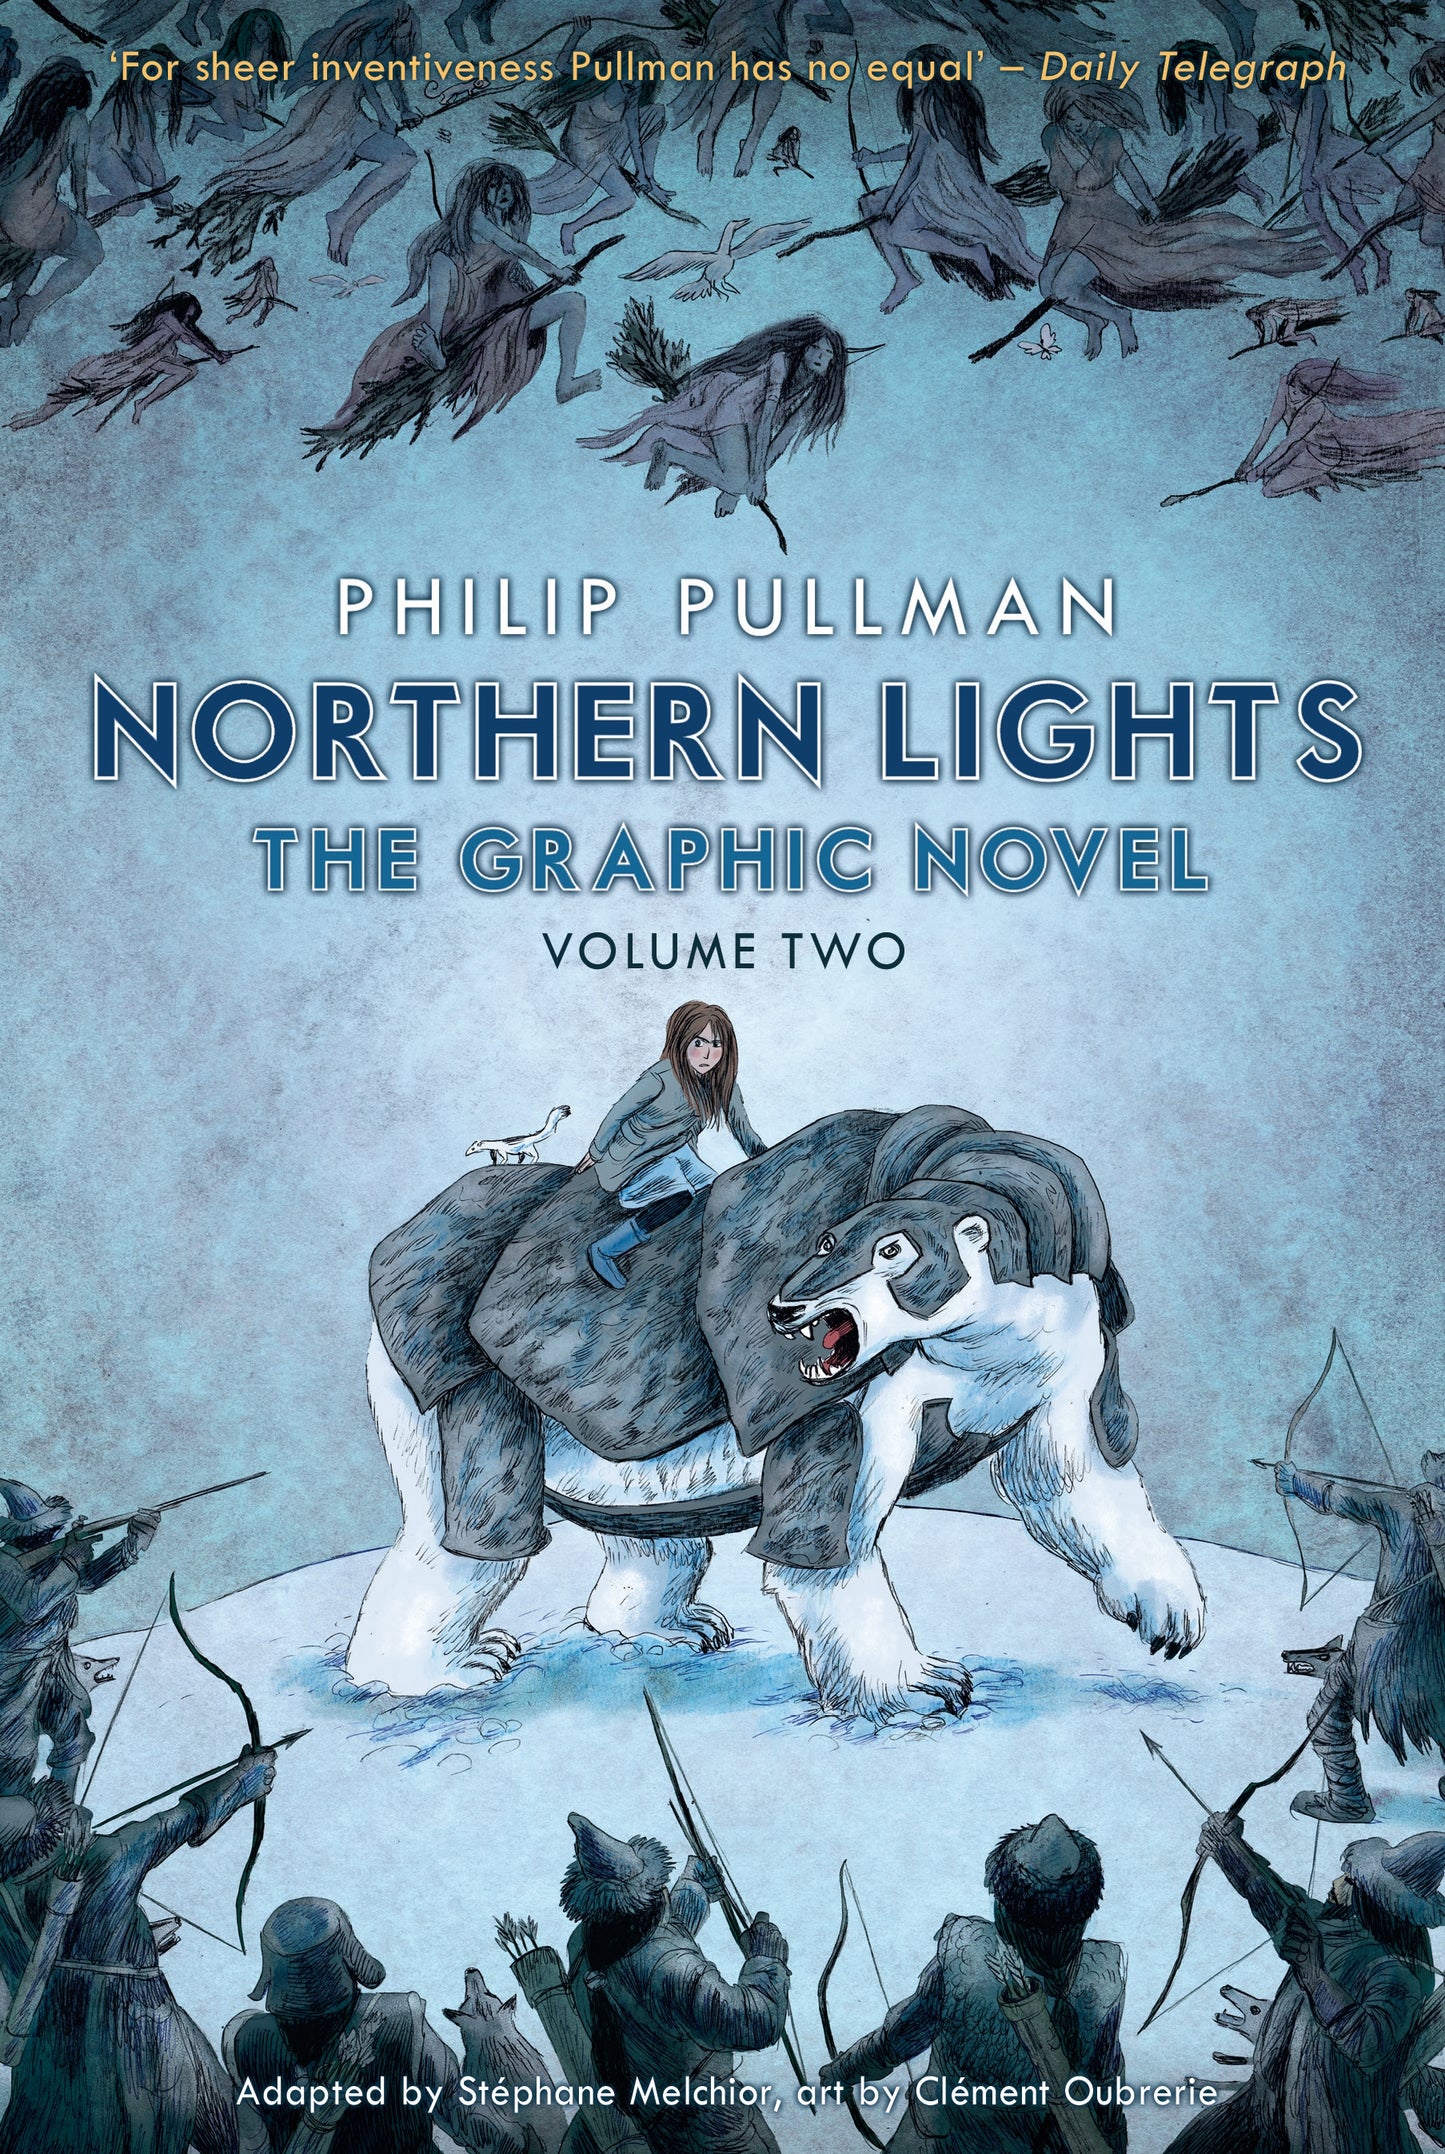 Northern Lights - The Graphic Novel Volume 2 (Trade Paperback)